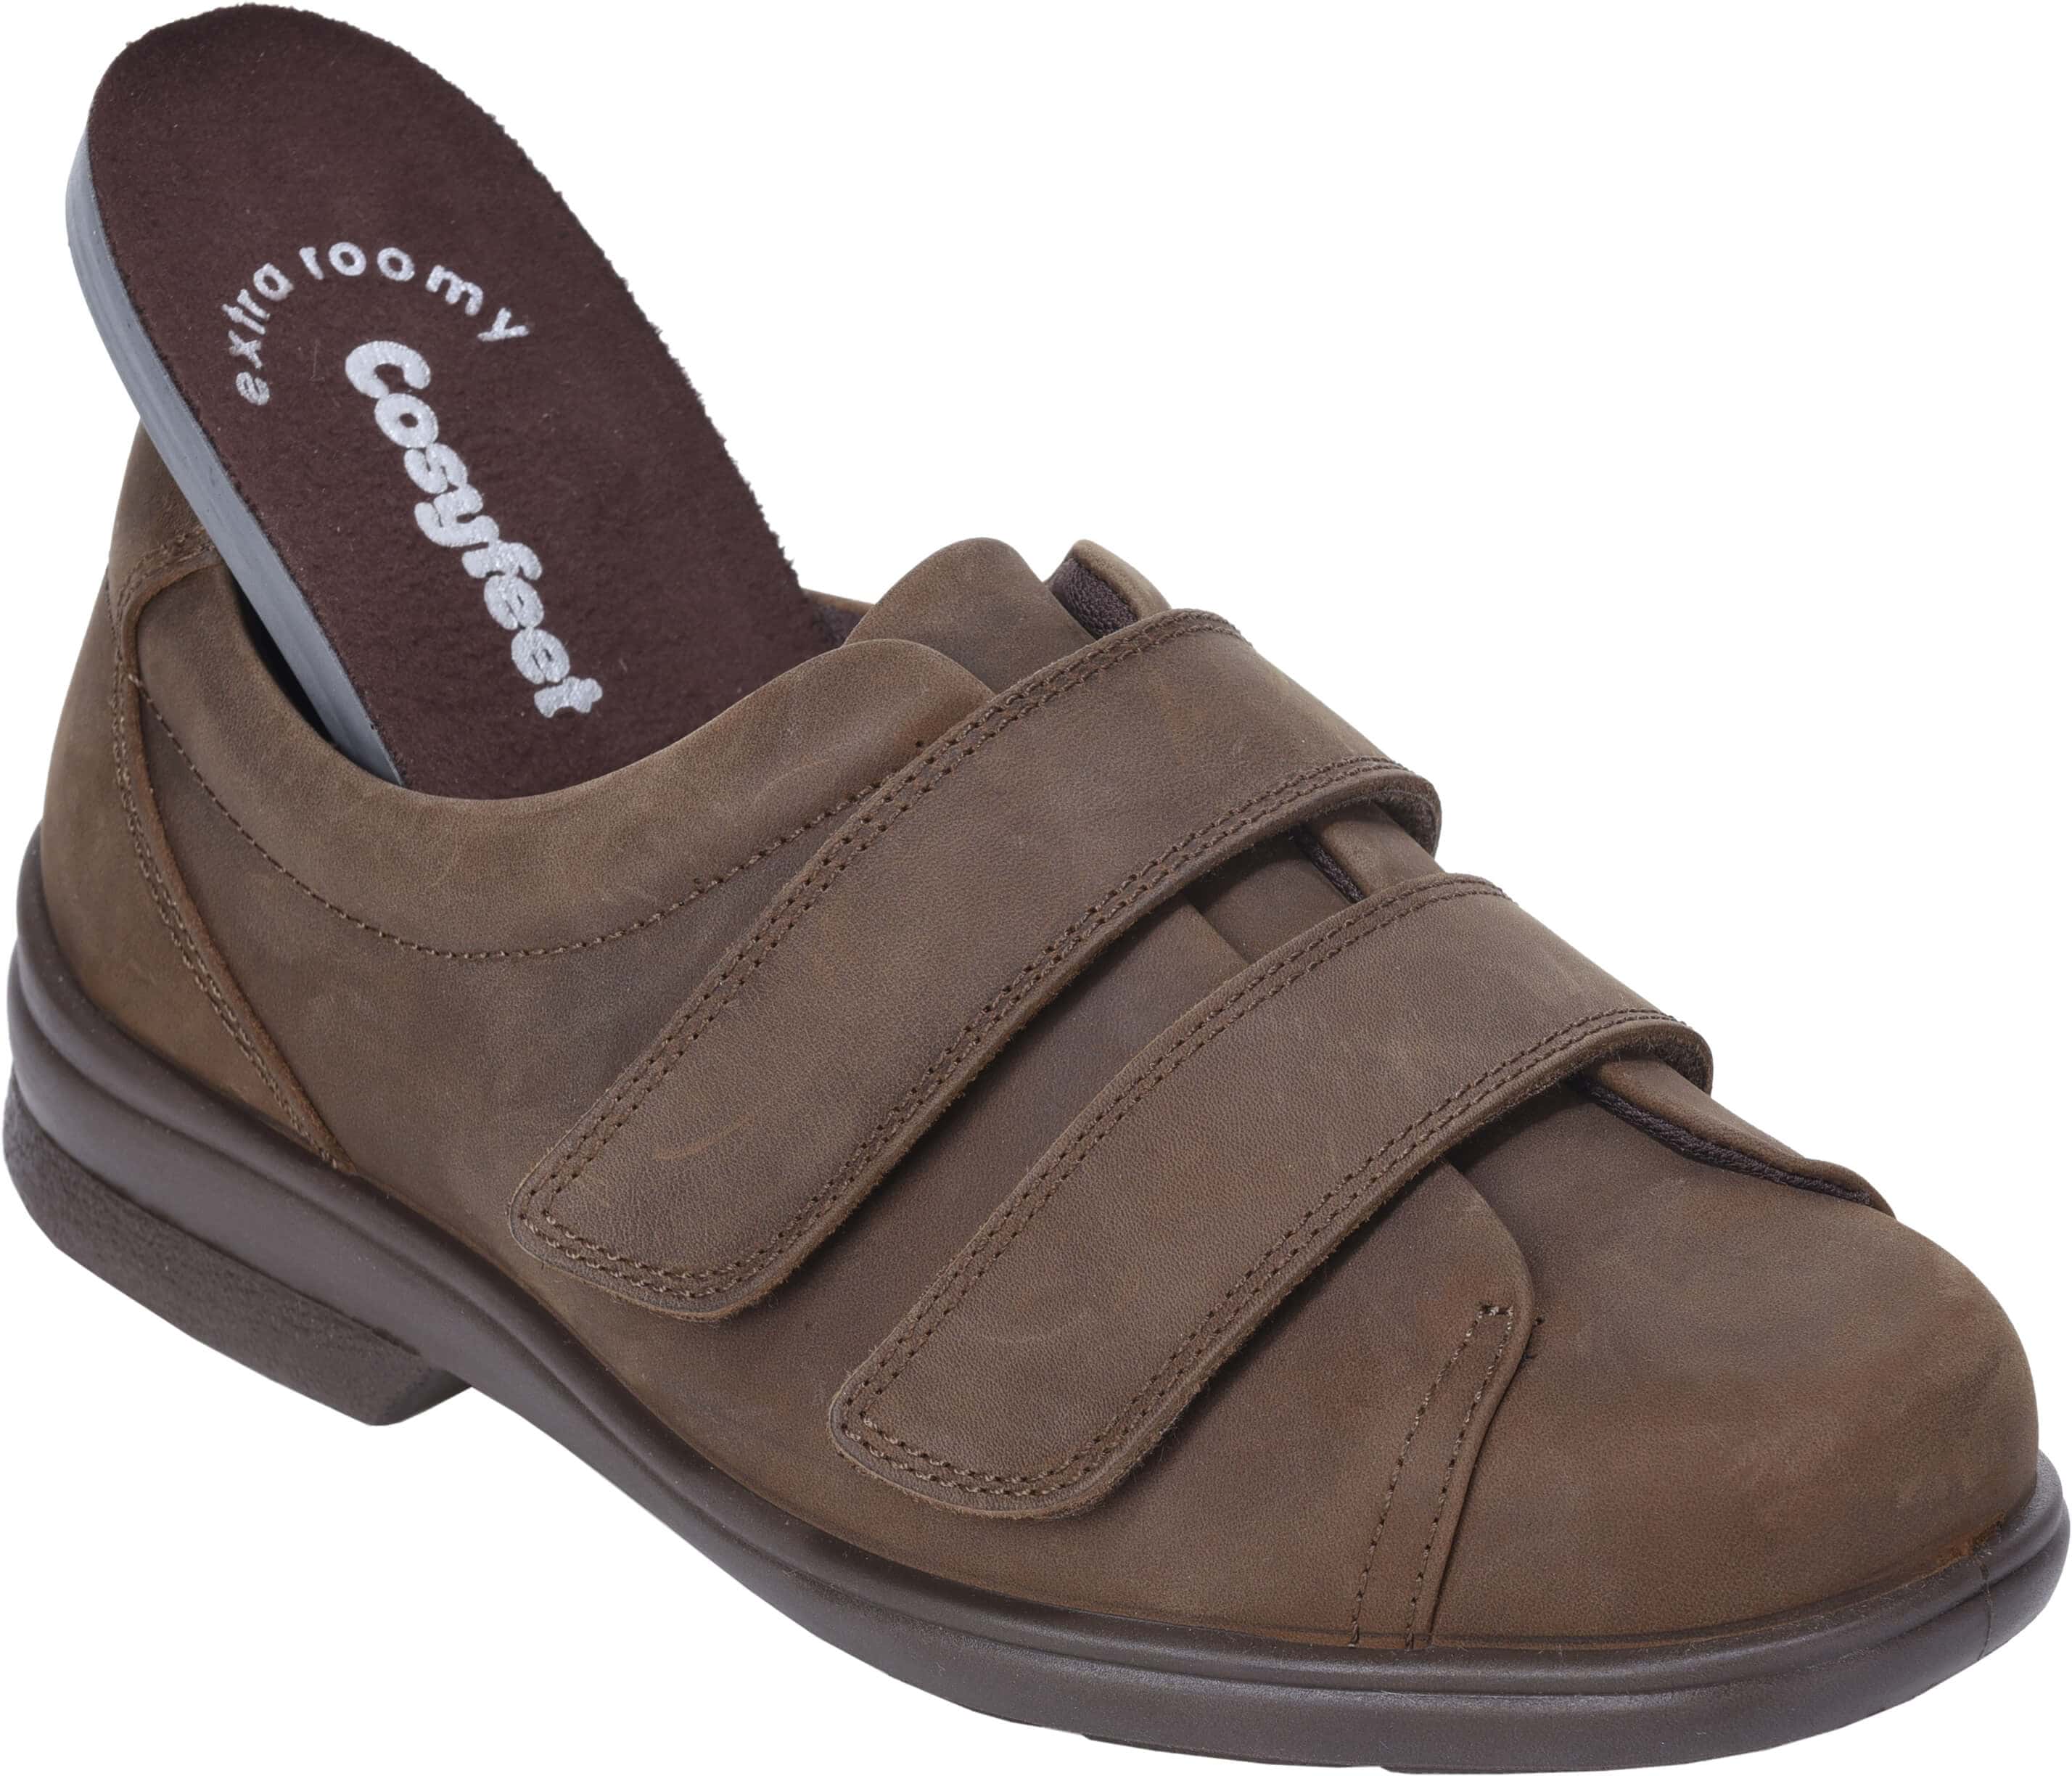 Premier supplier of Cosyfeet footwear 